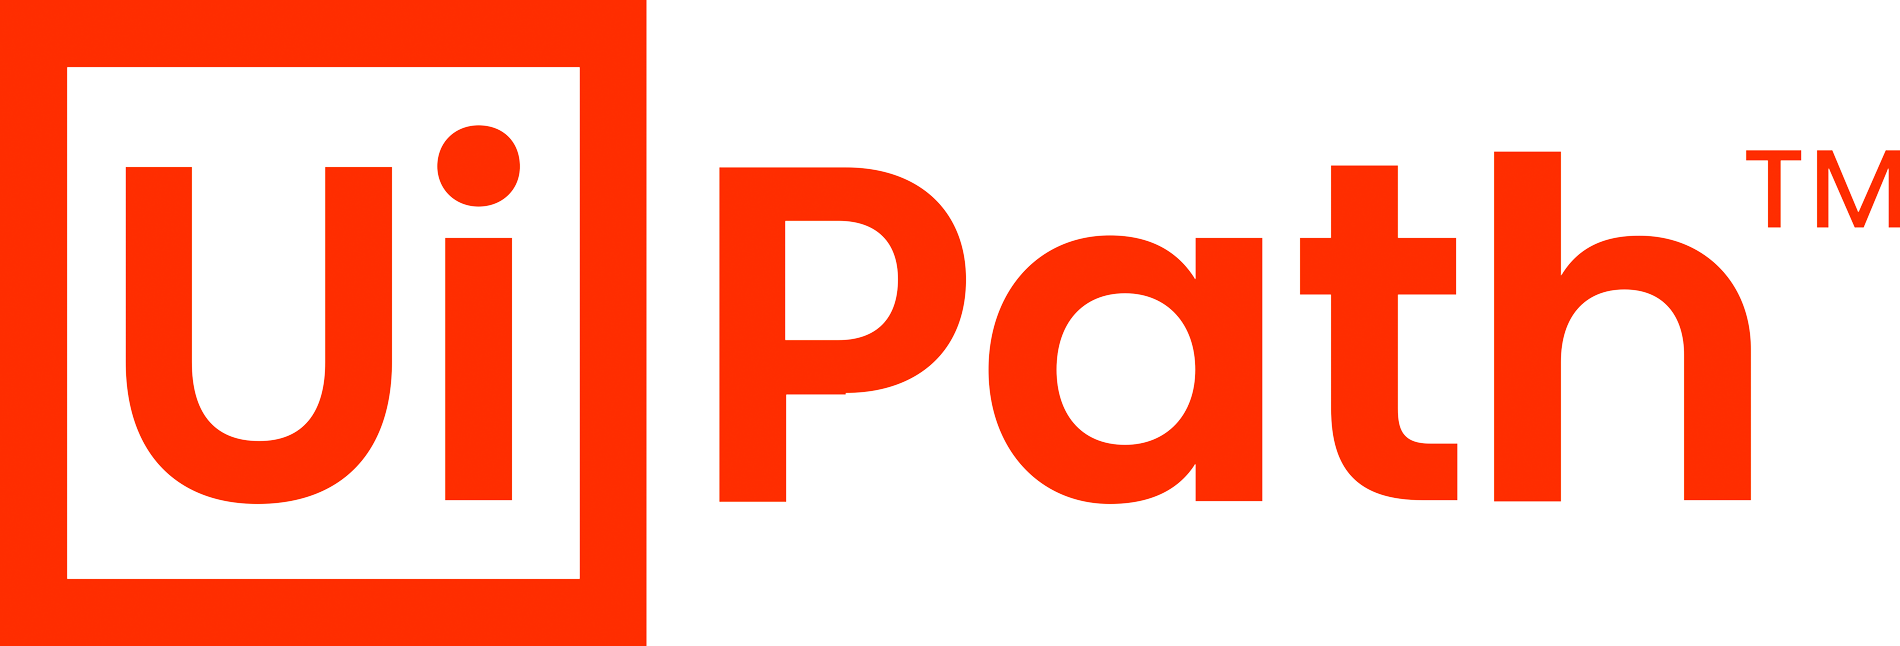 UI Path logo